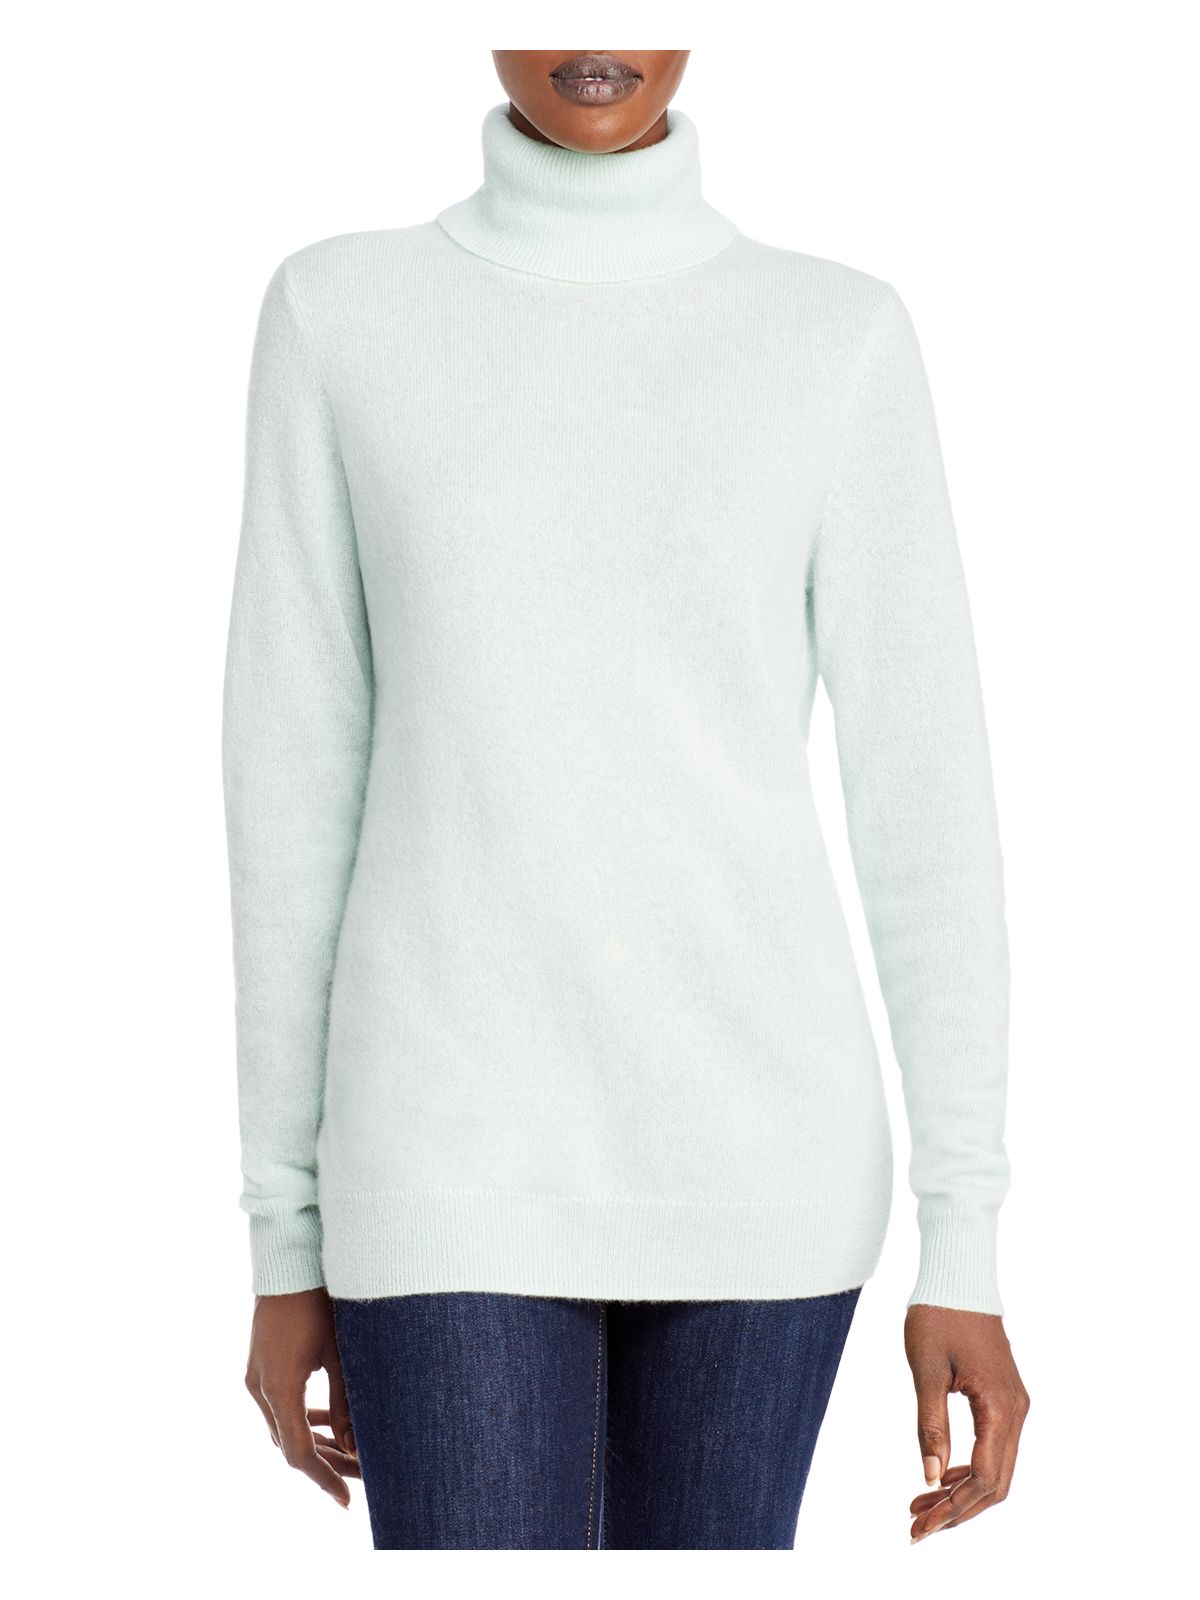 Designer Brand Womens Green Long Sleeve Turtle Neck Sweater M